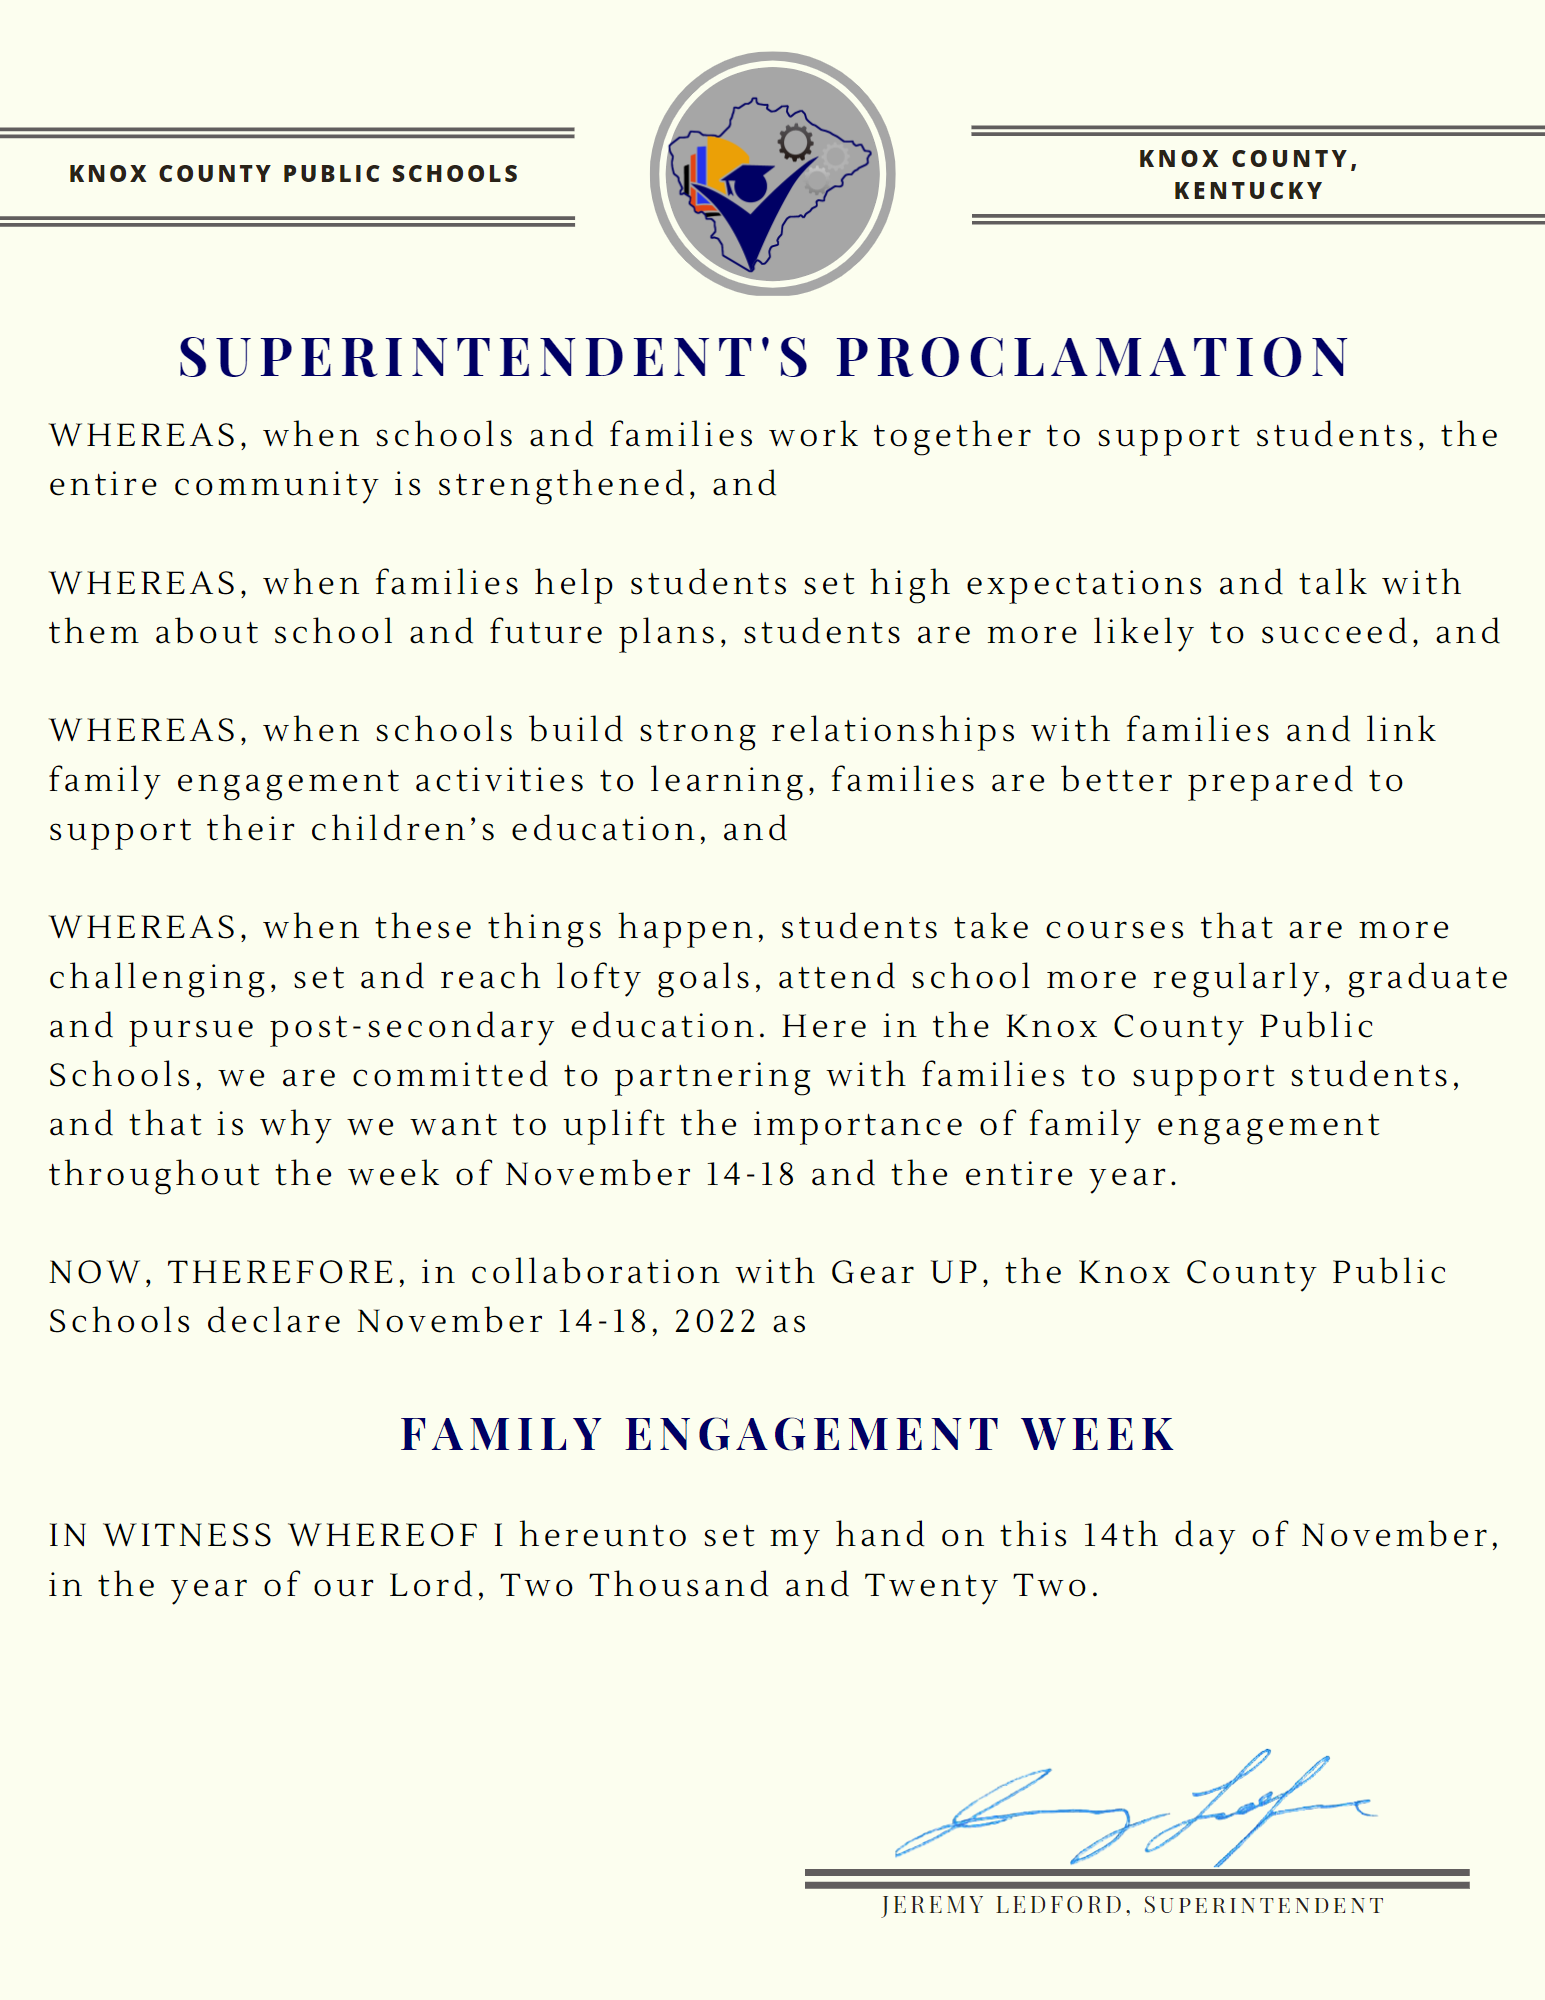 Family Engagement Proclamation